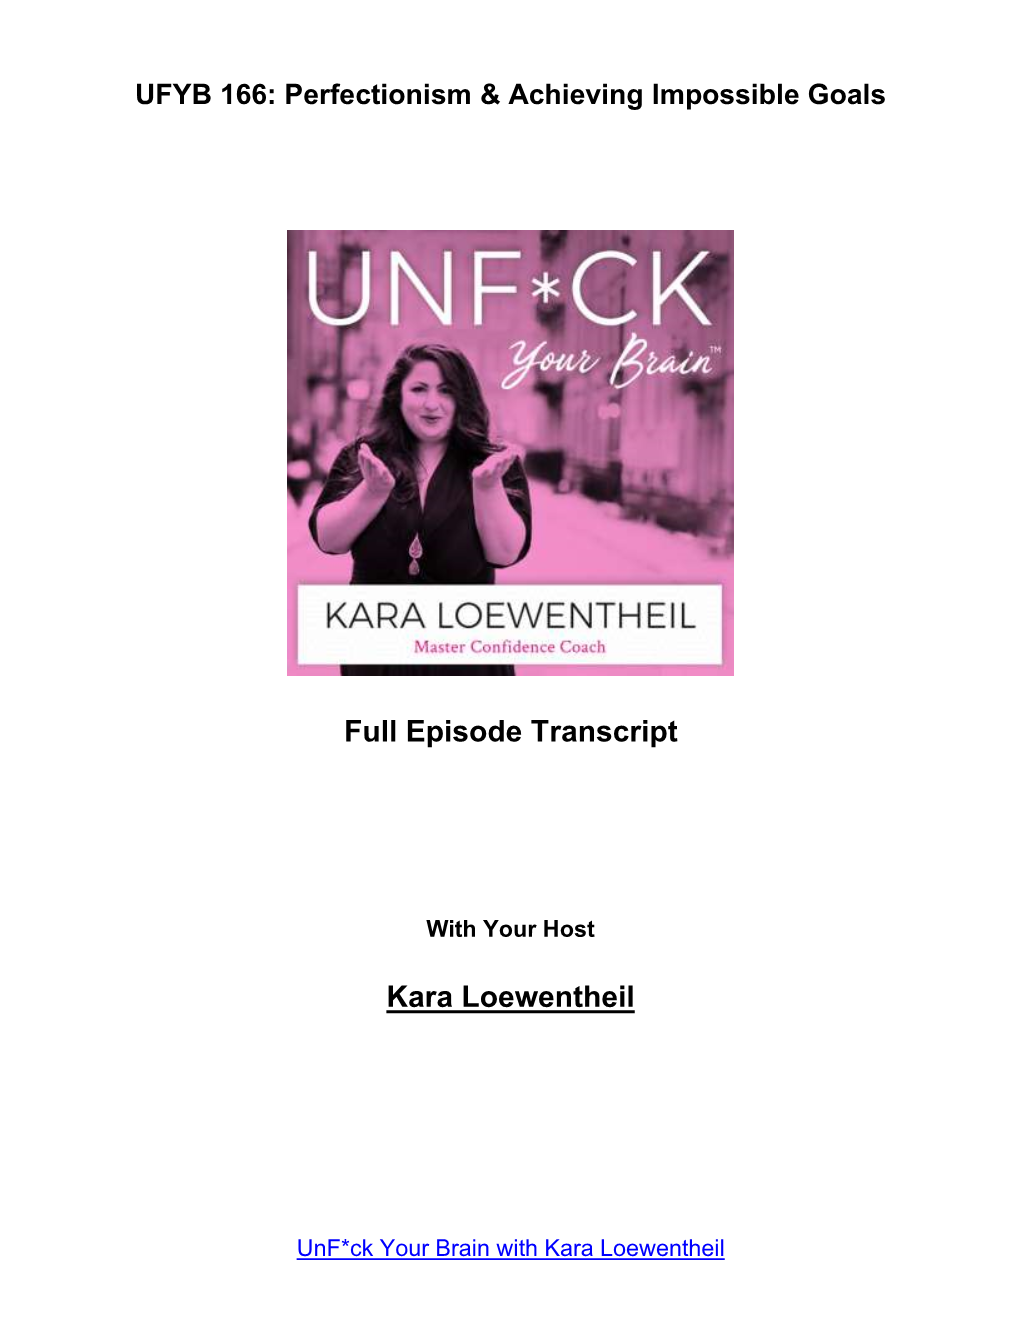 Full Episode Transcript Kara Loewentheil